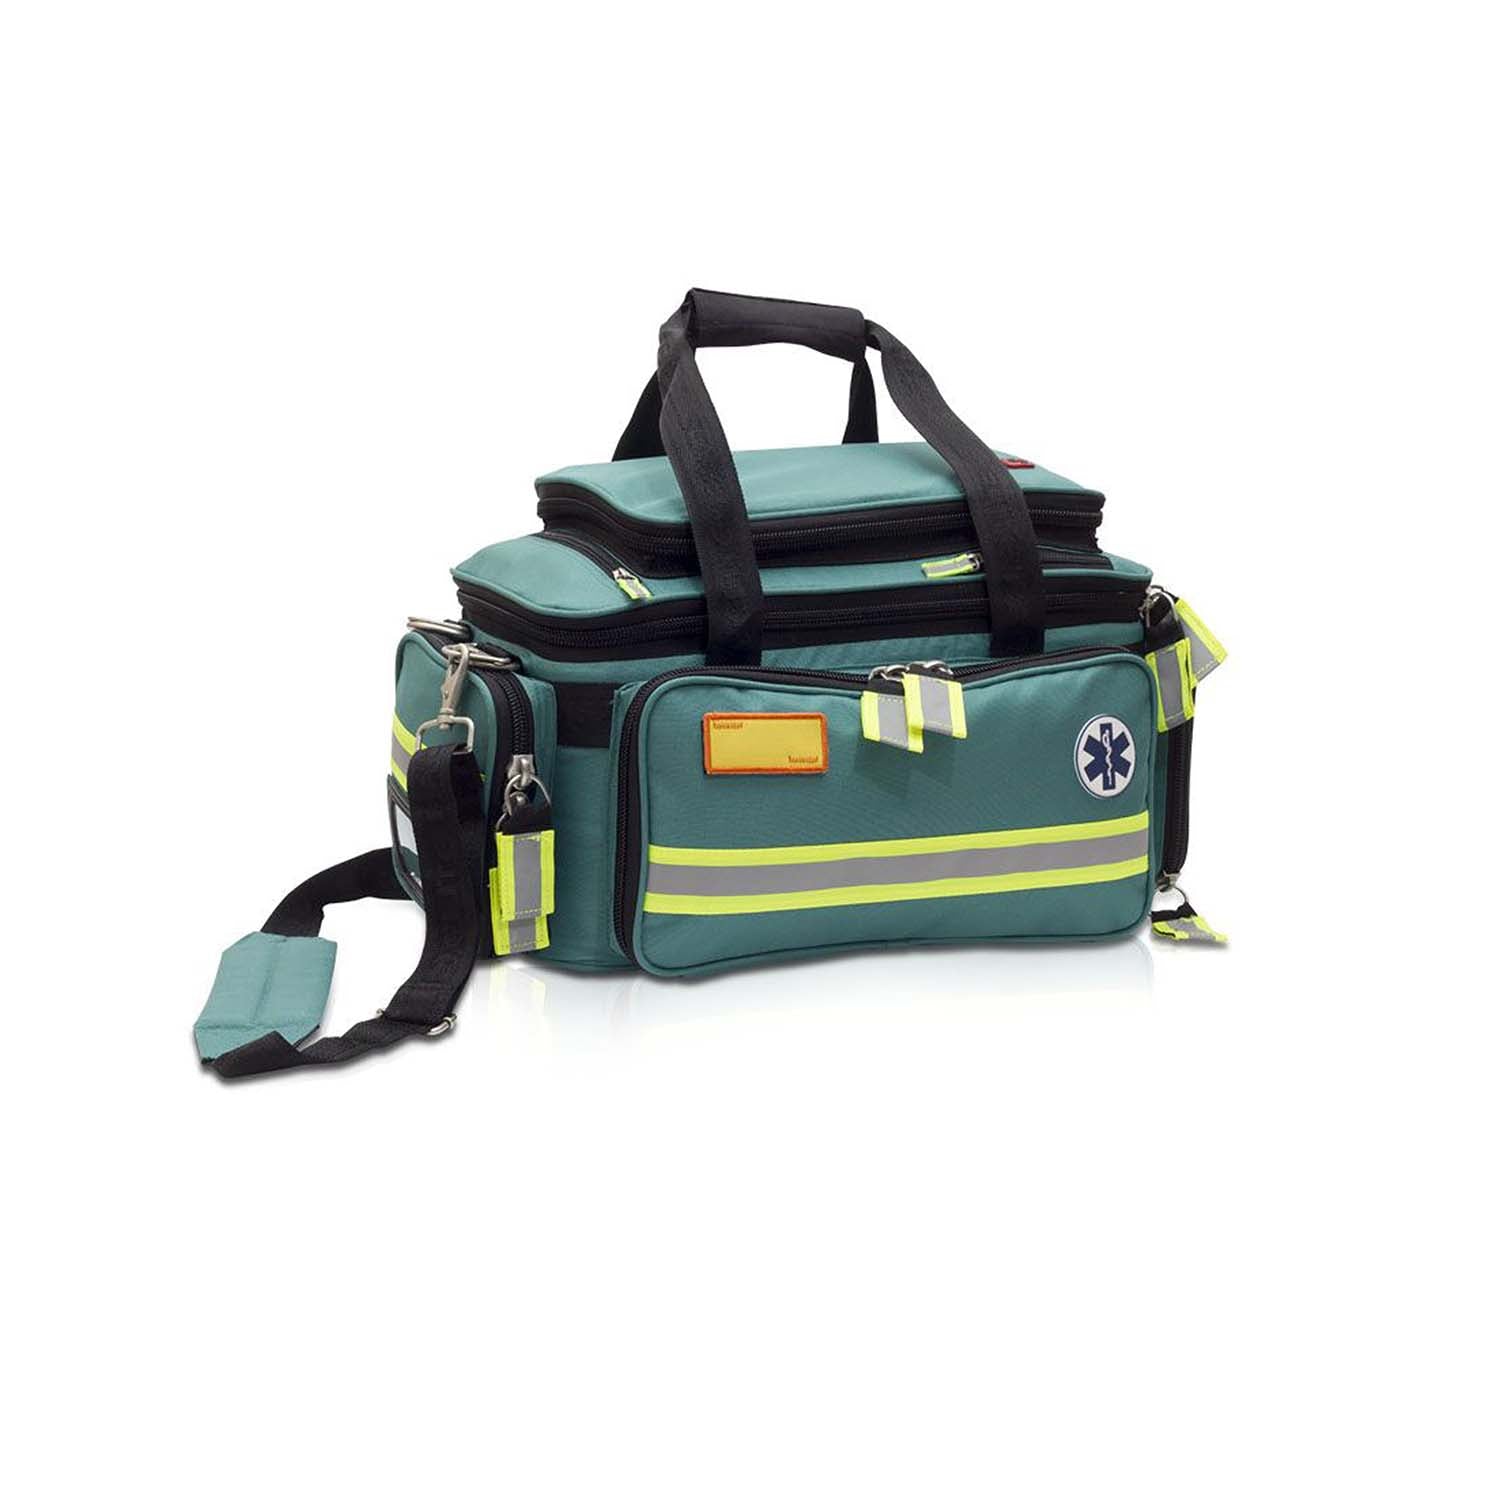 Emergency Bag for Basic Life Support | Green